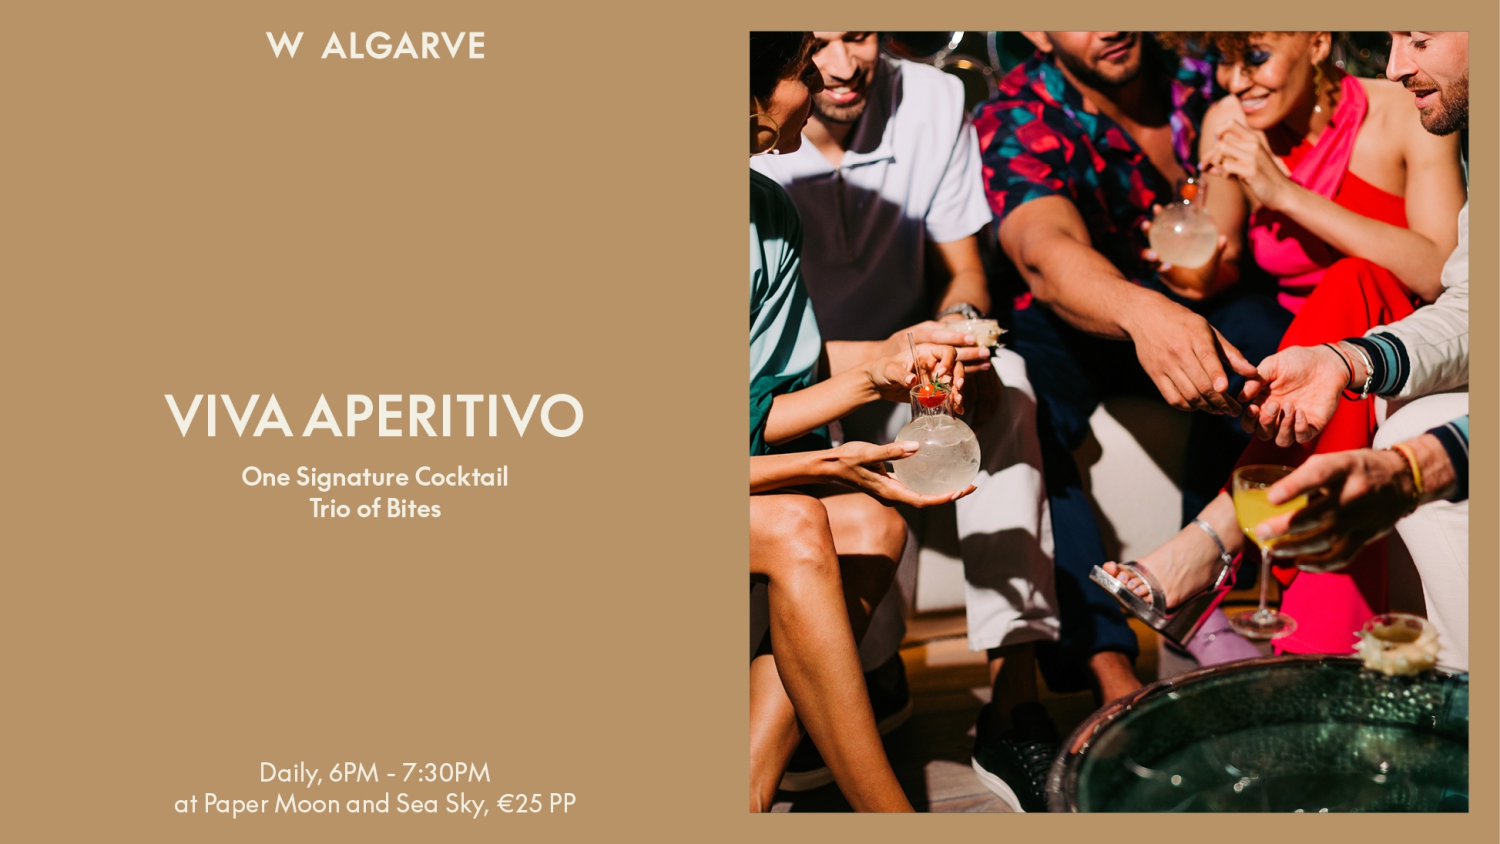 Viva Aperitivo at W Algarve